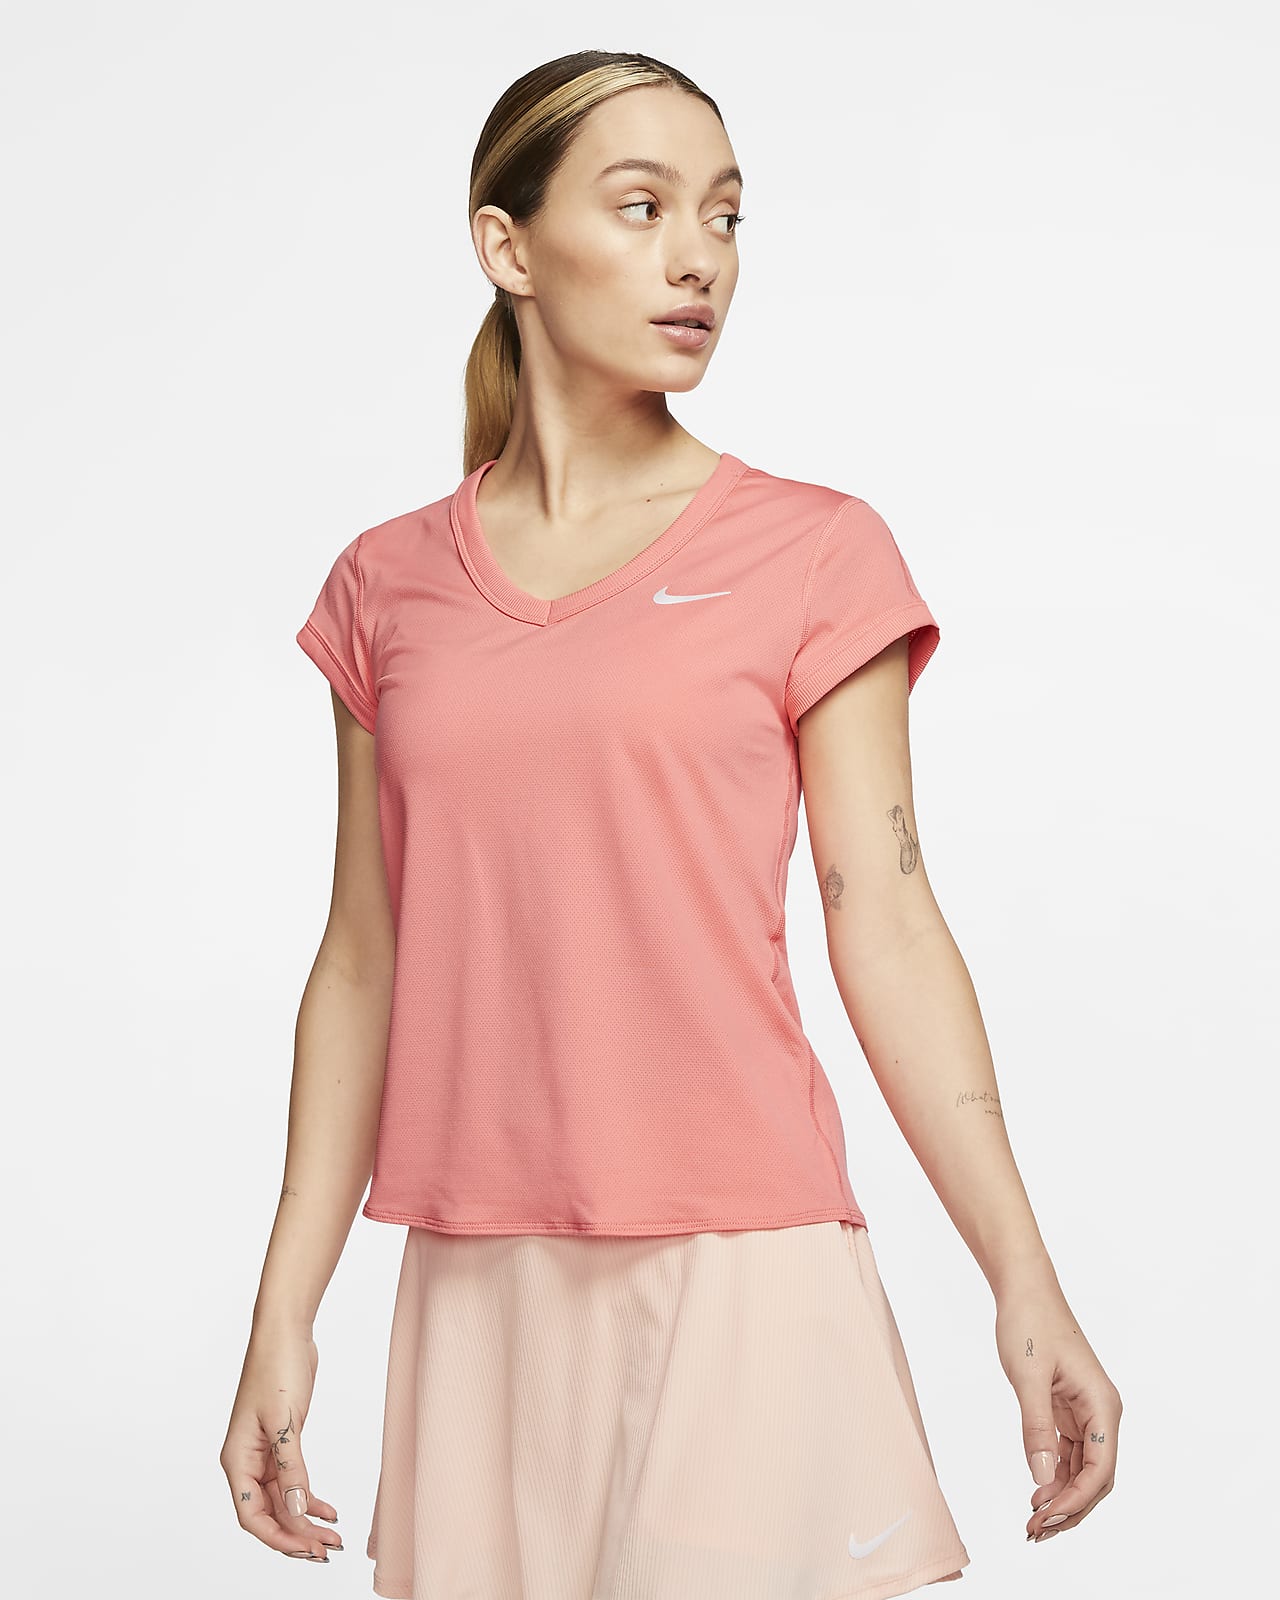 nike women's court dry short sleeve tennis top